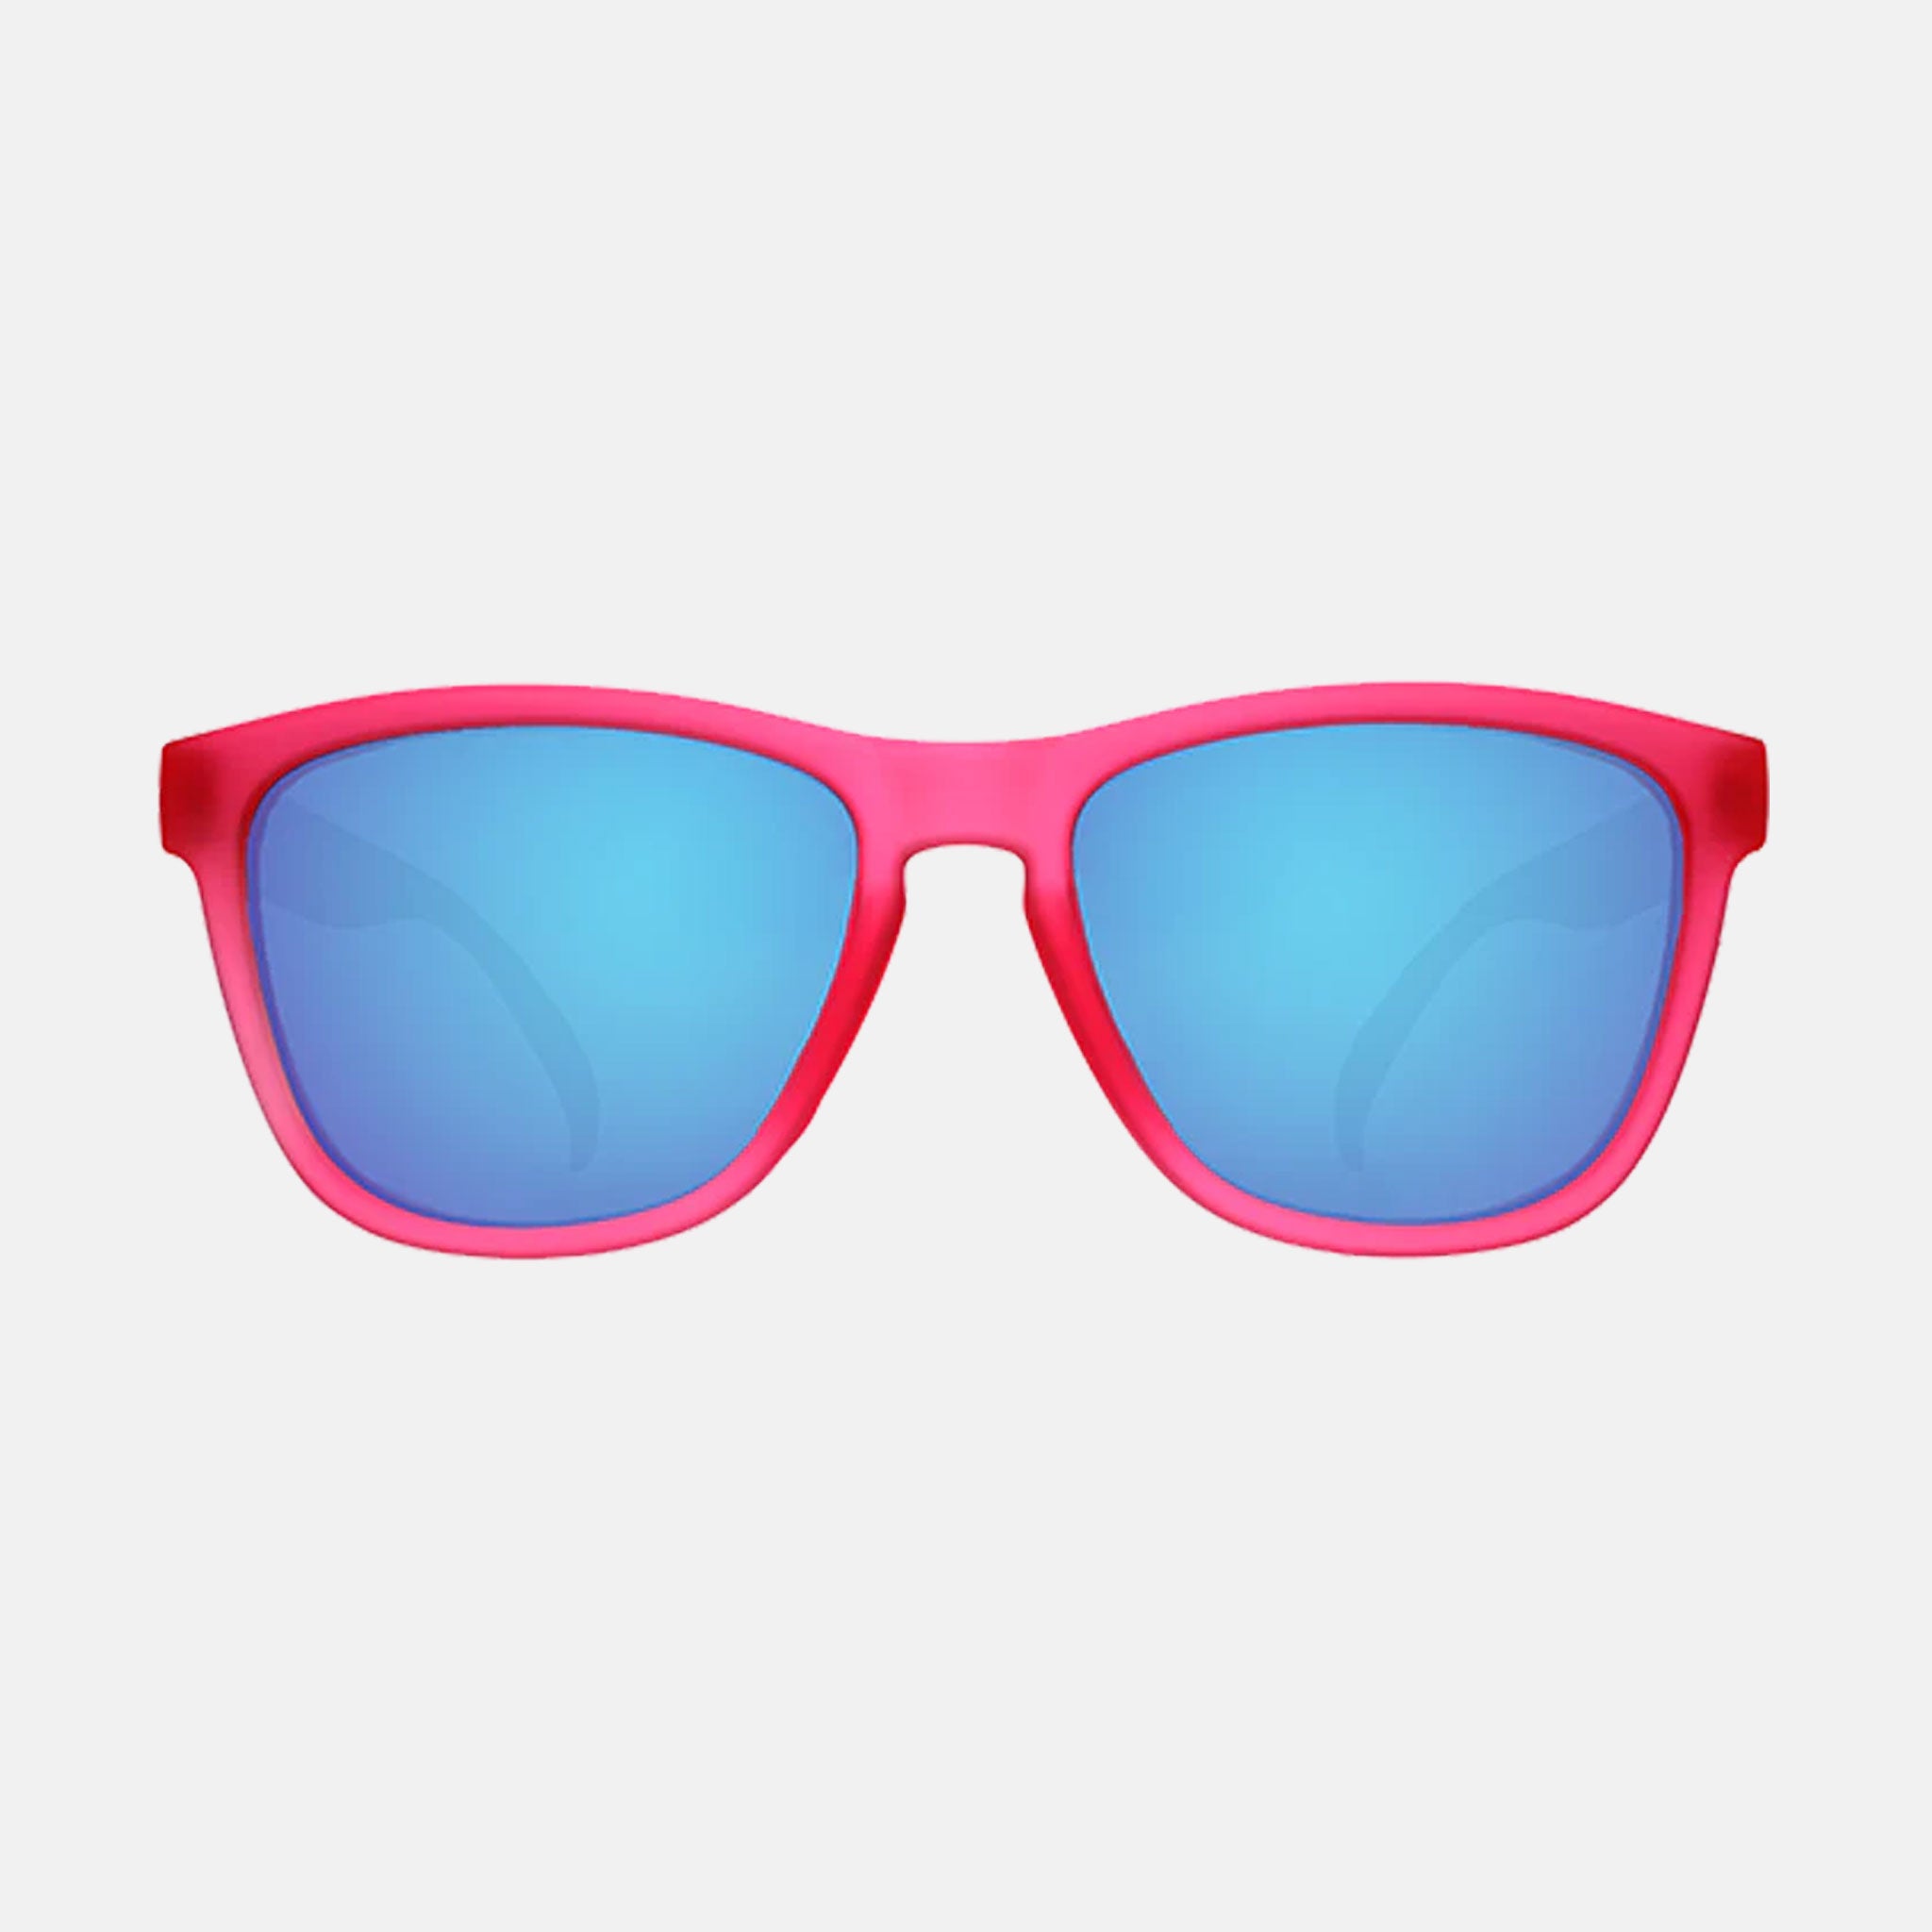 Goodr Sunglasses - Flamingos on a Booze Cruise